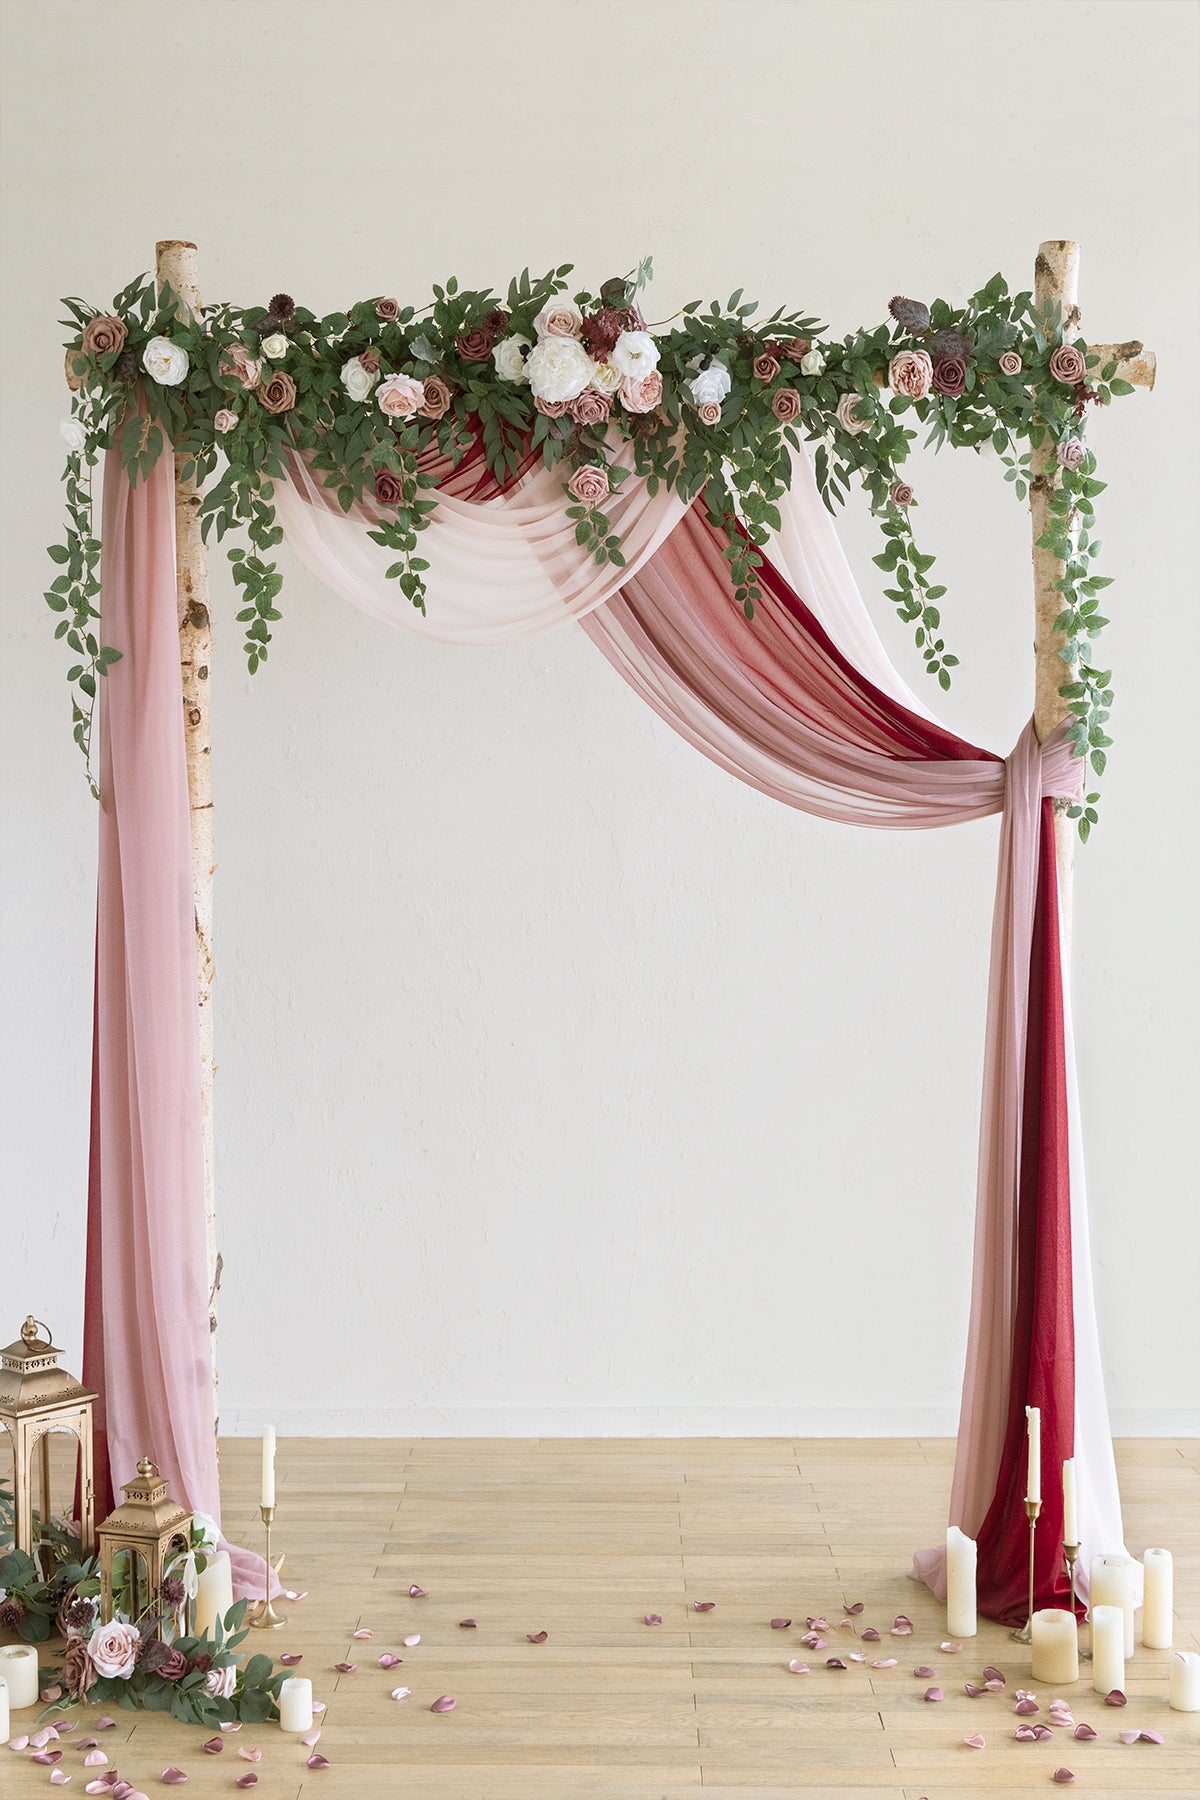 Wedding Arch Drapes in Burgundy & Dusty Rose